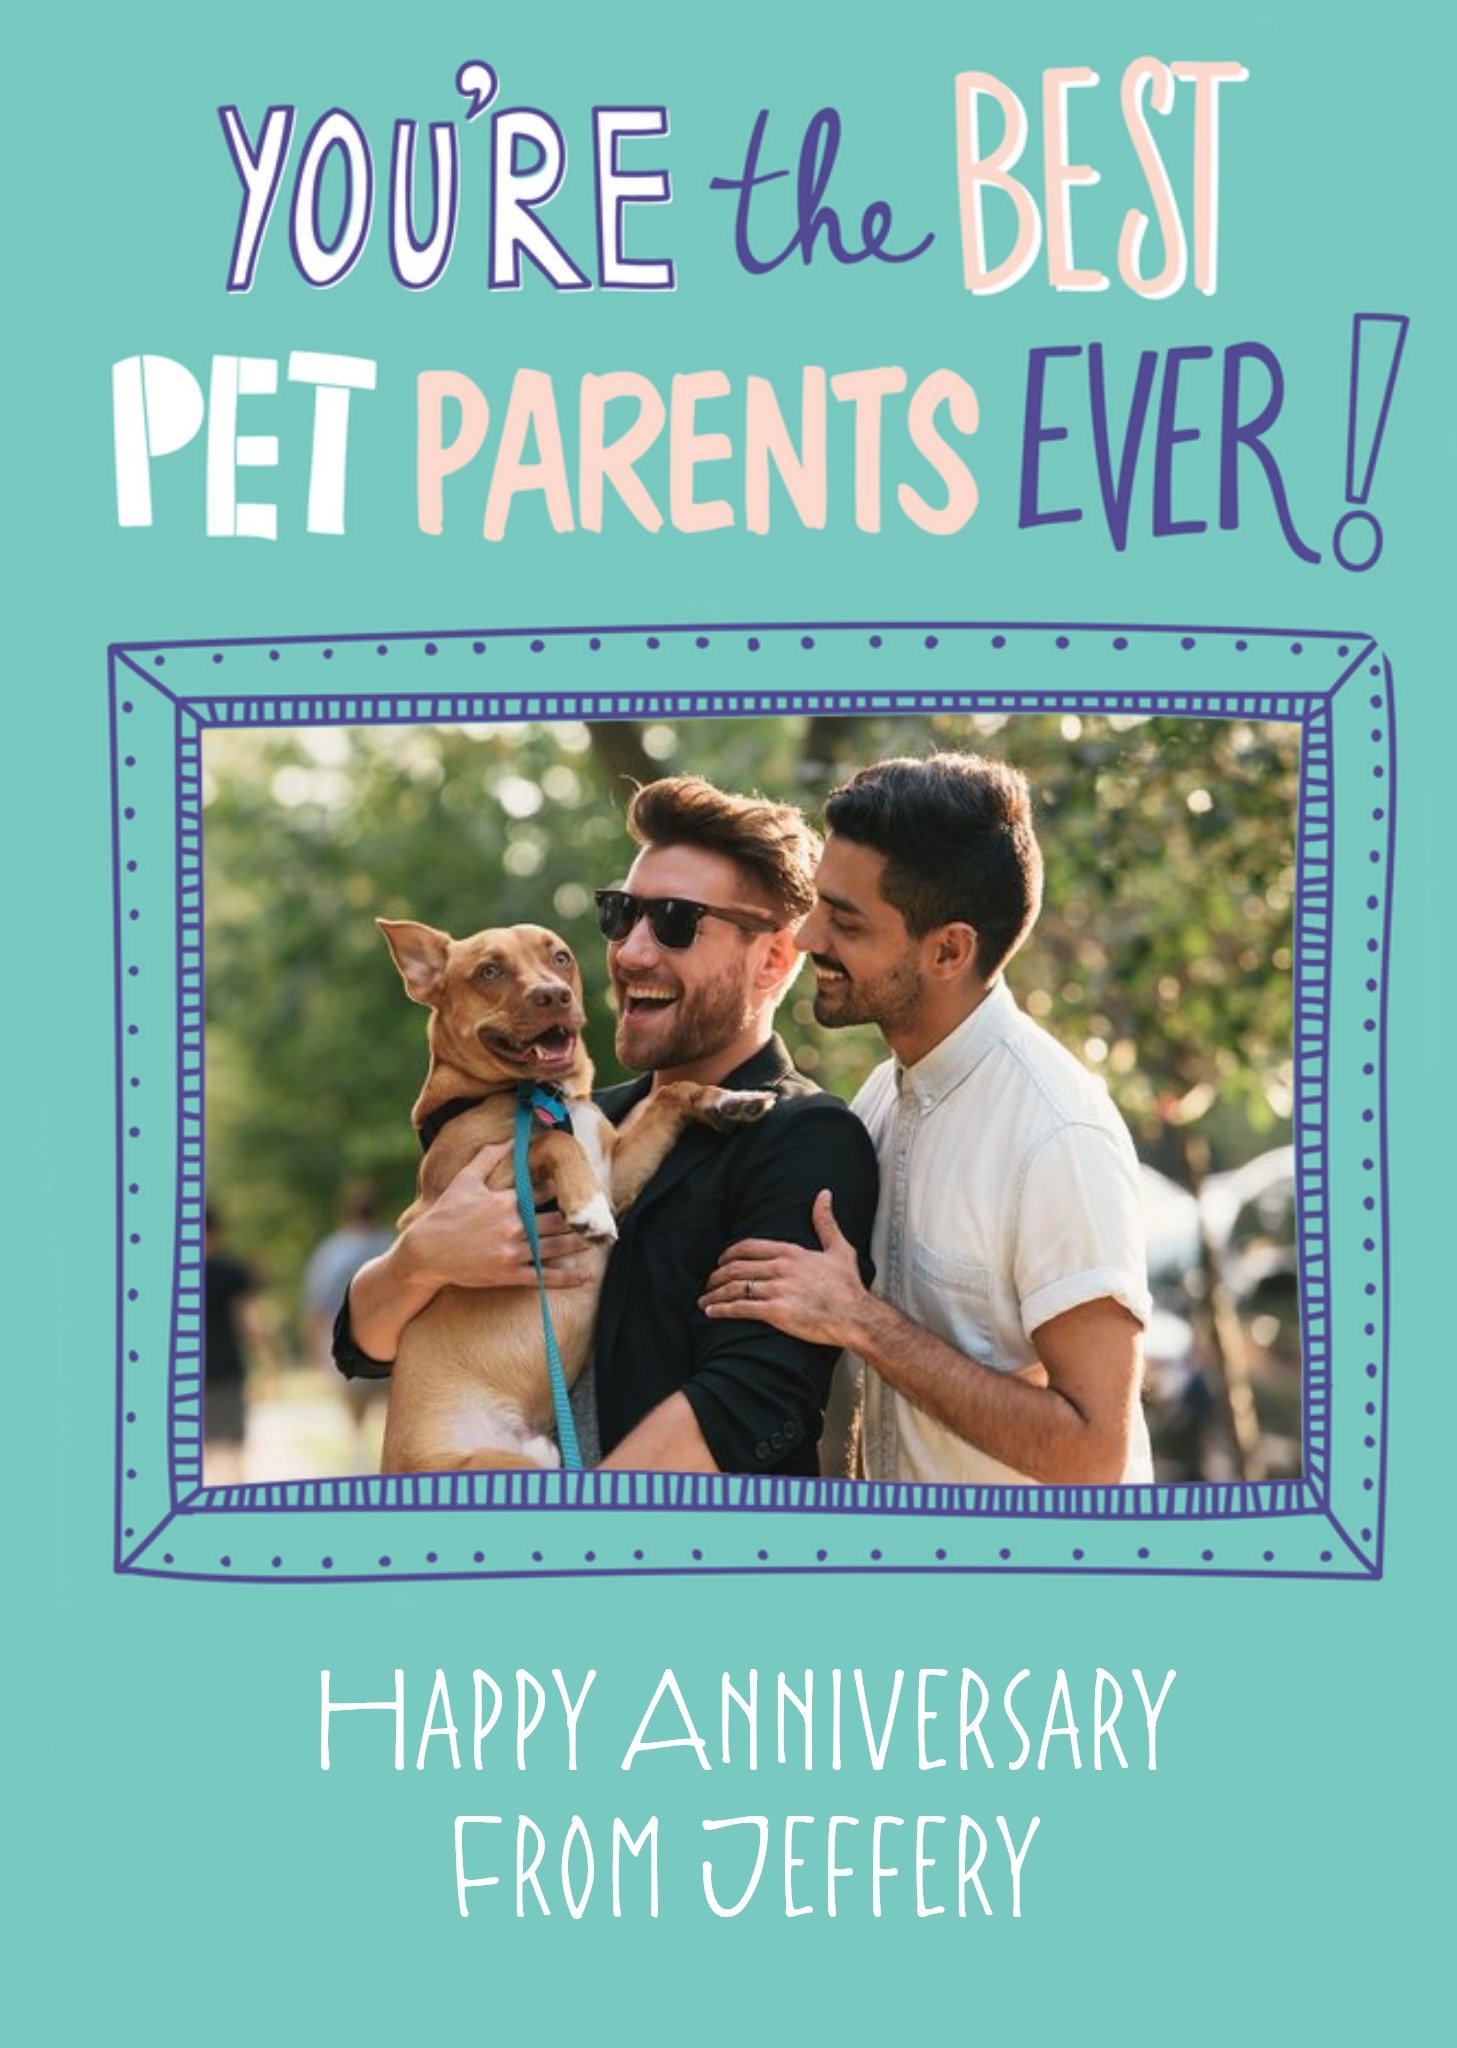 Moonpig Best Pet Parents Ever Photo Upload Anniversary Card, Large